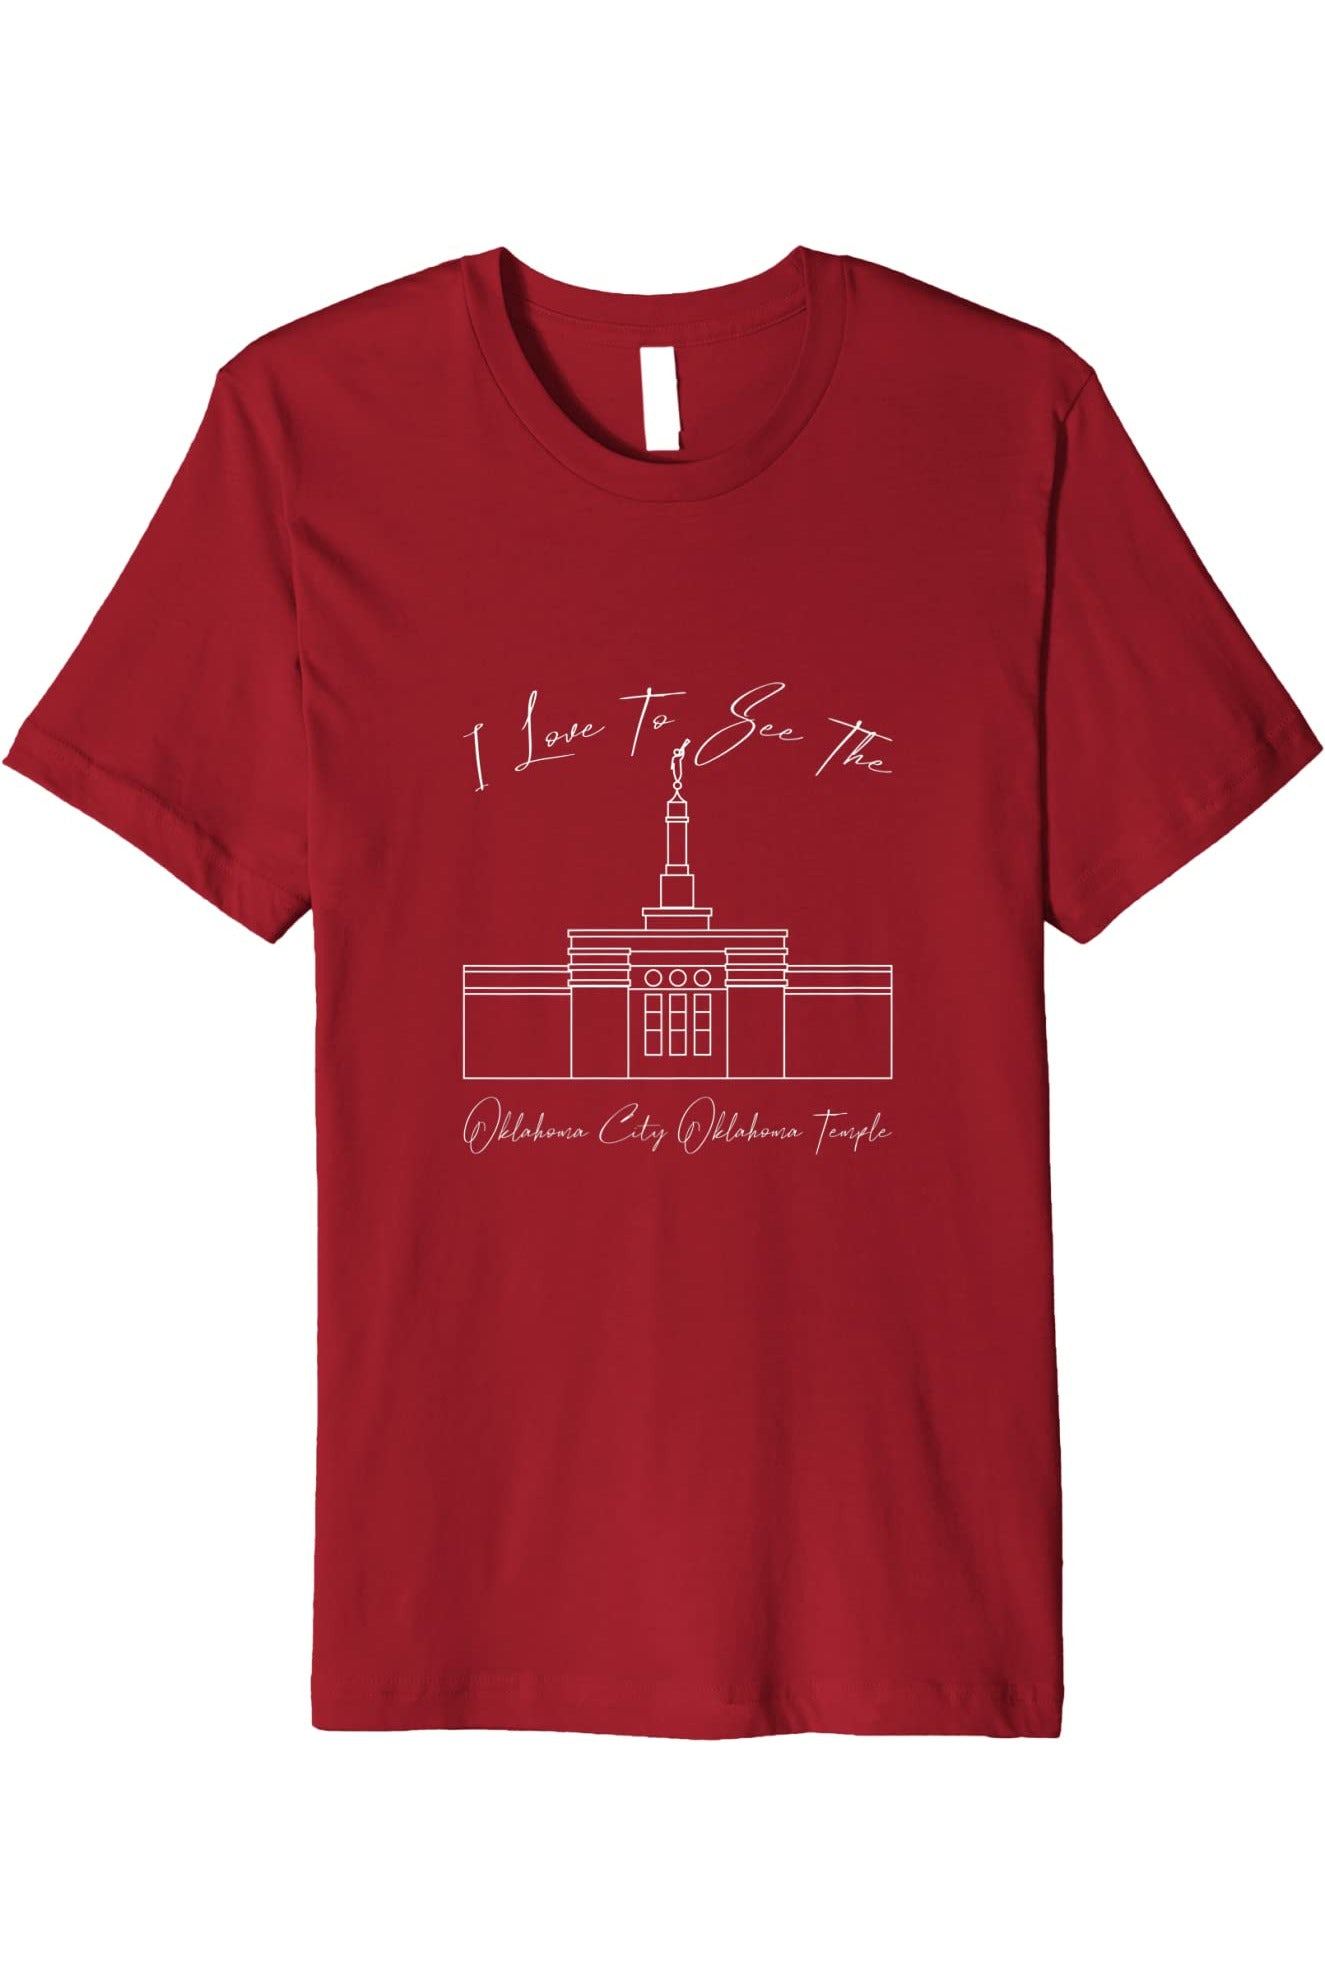 Oklahoma City Oklahoma Temple T-Shirt - Premium - Calligraphy Style (English) US